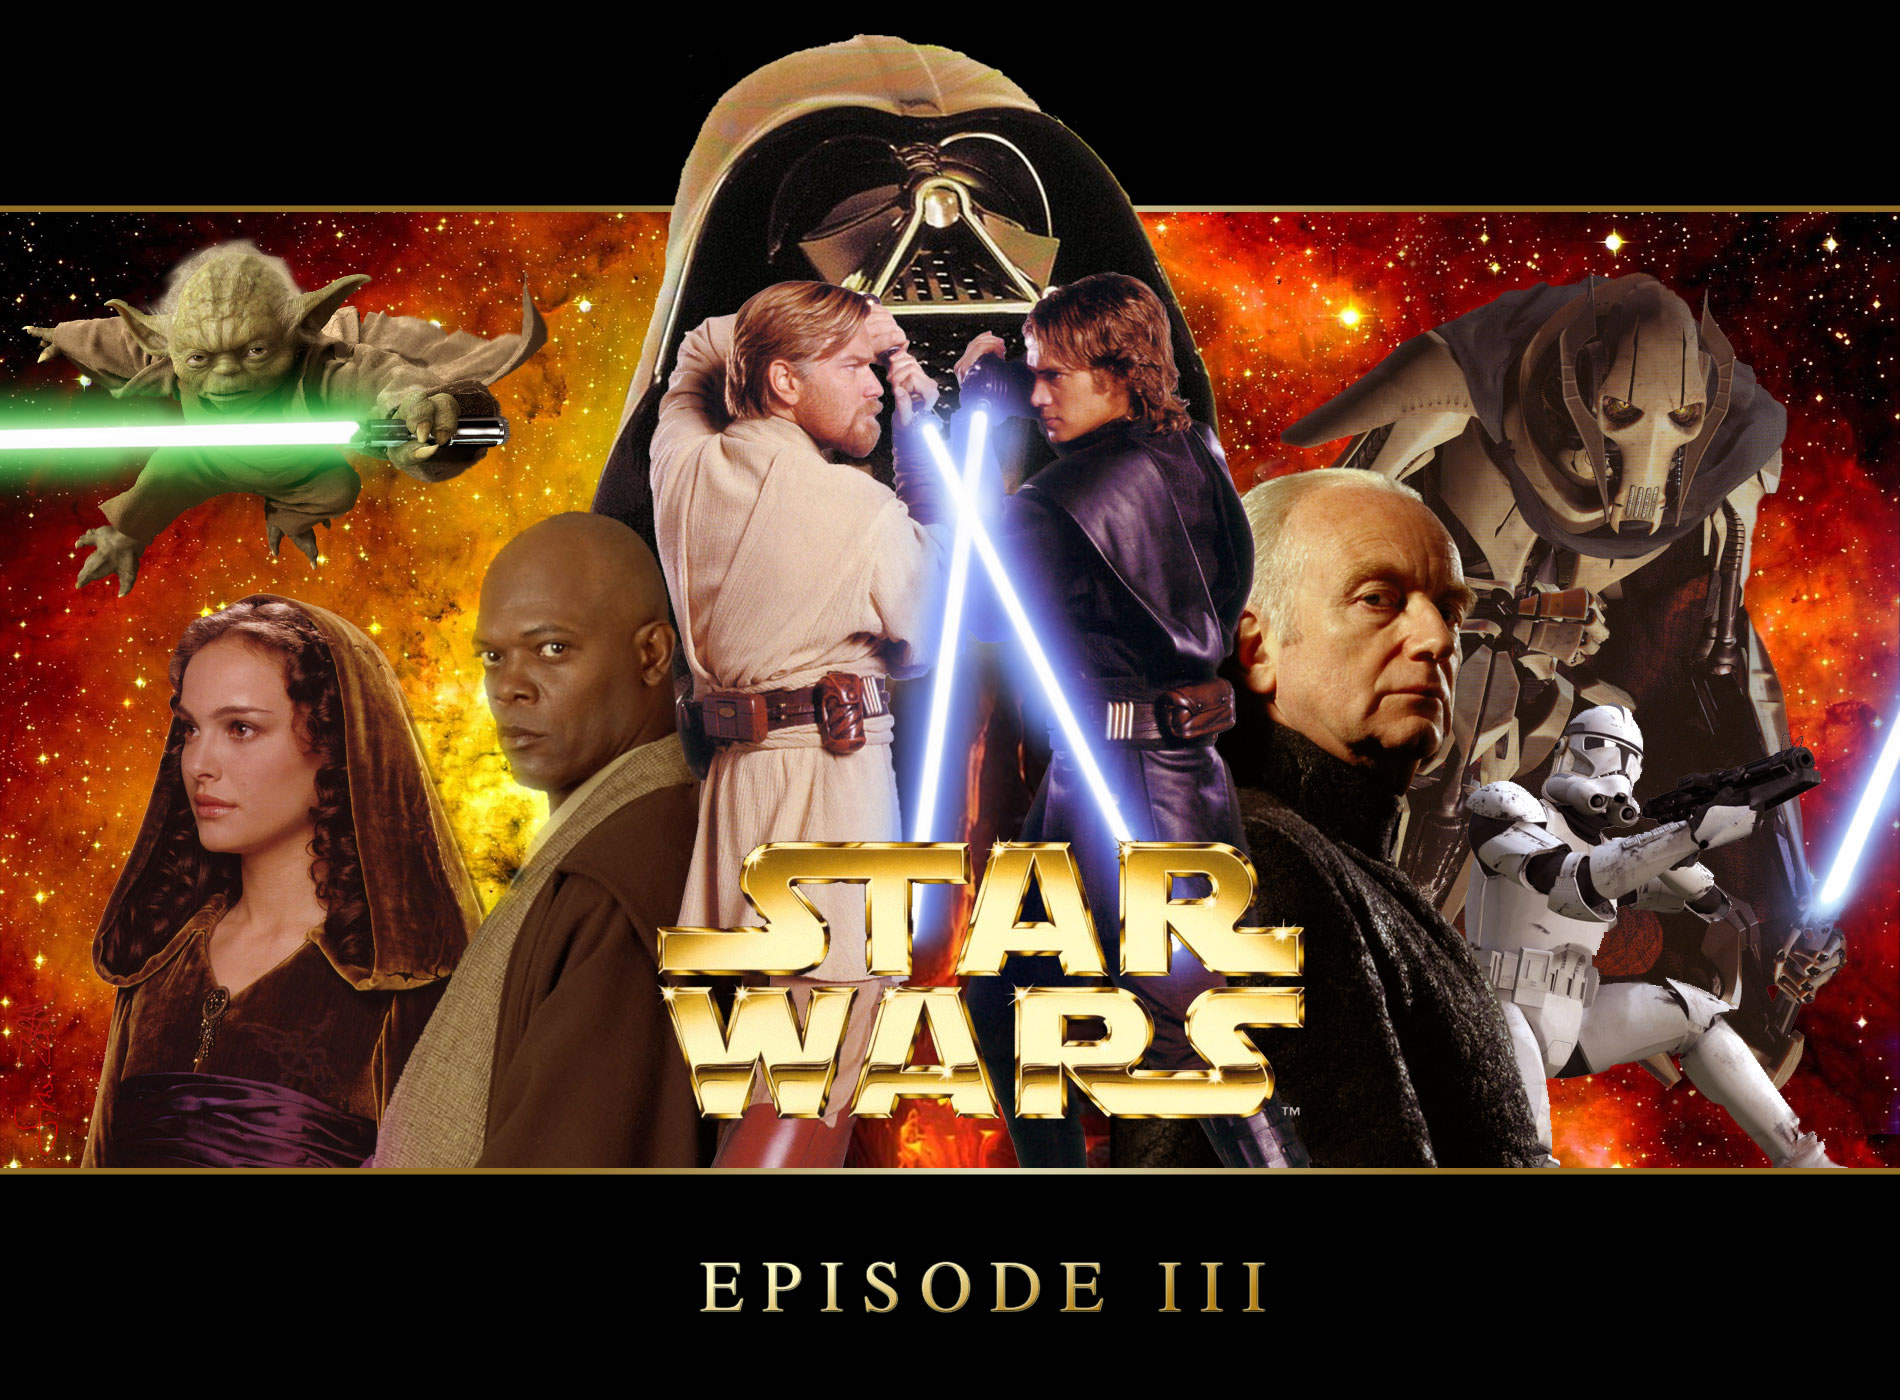 Movie Star Wars Episode III: Revenge of the Sith Wallpaper